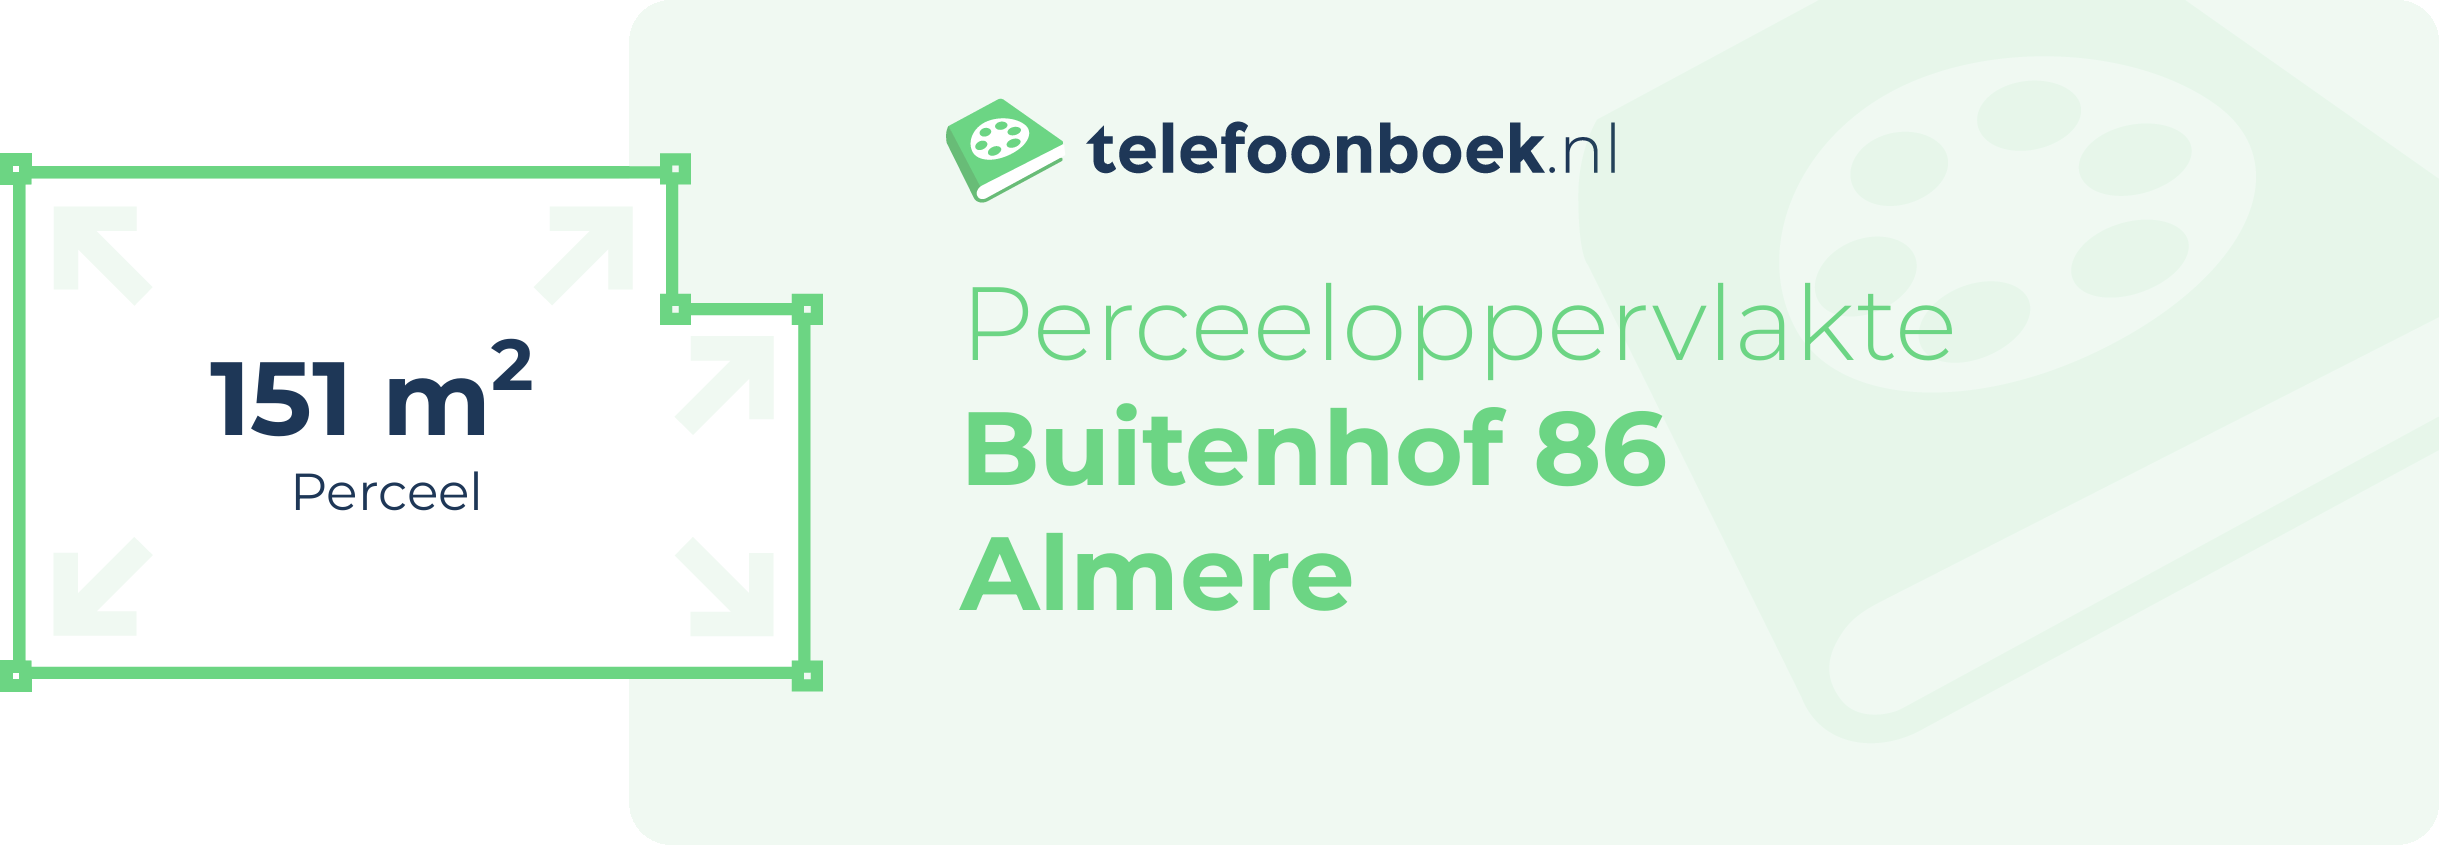 Perceeloppervlakte Buitenhof 86 Almere